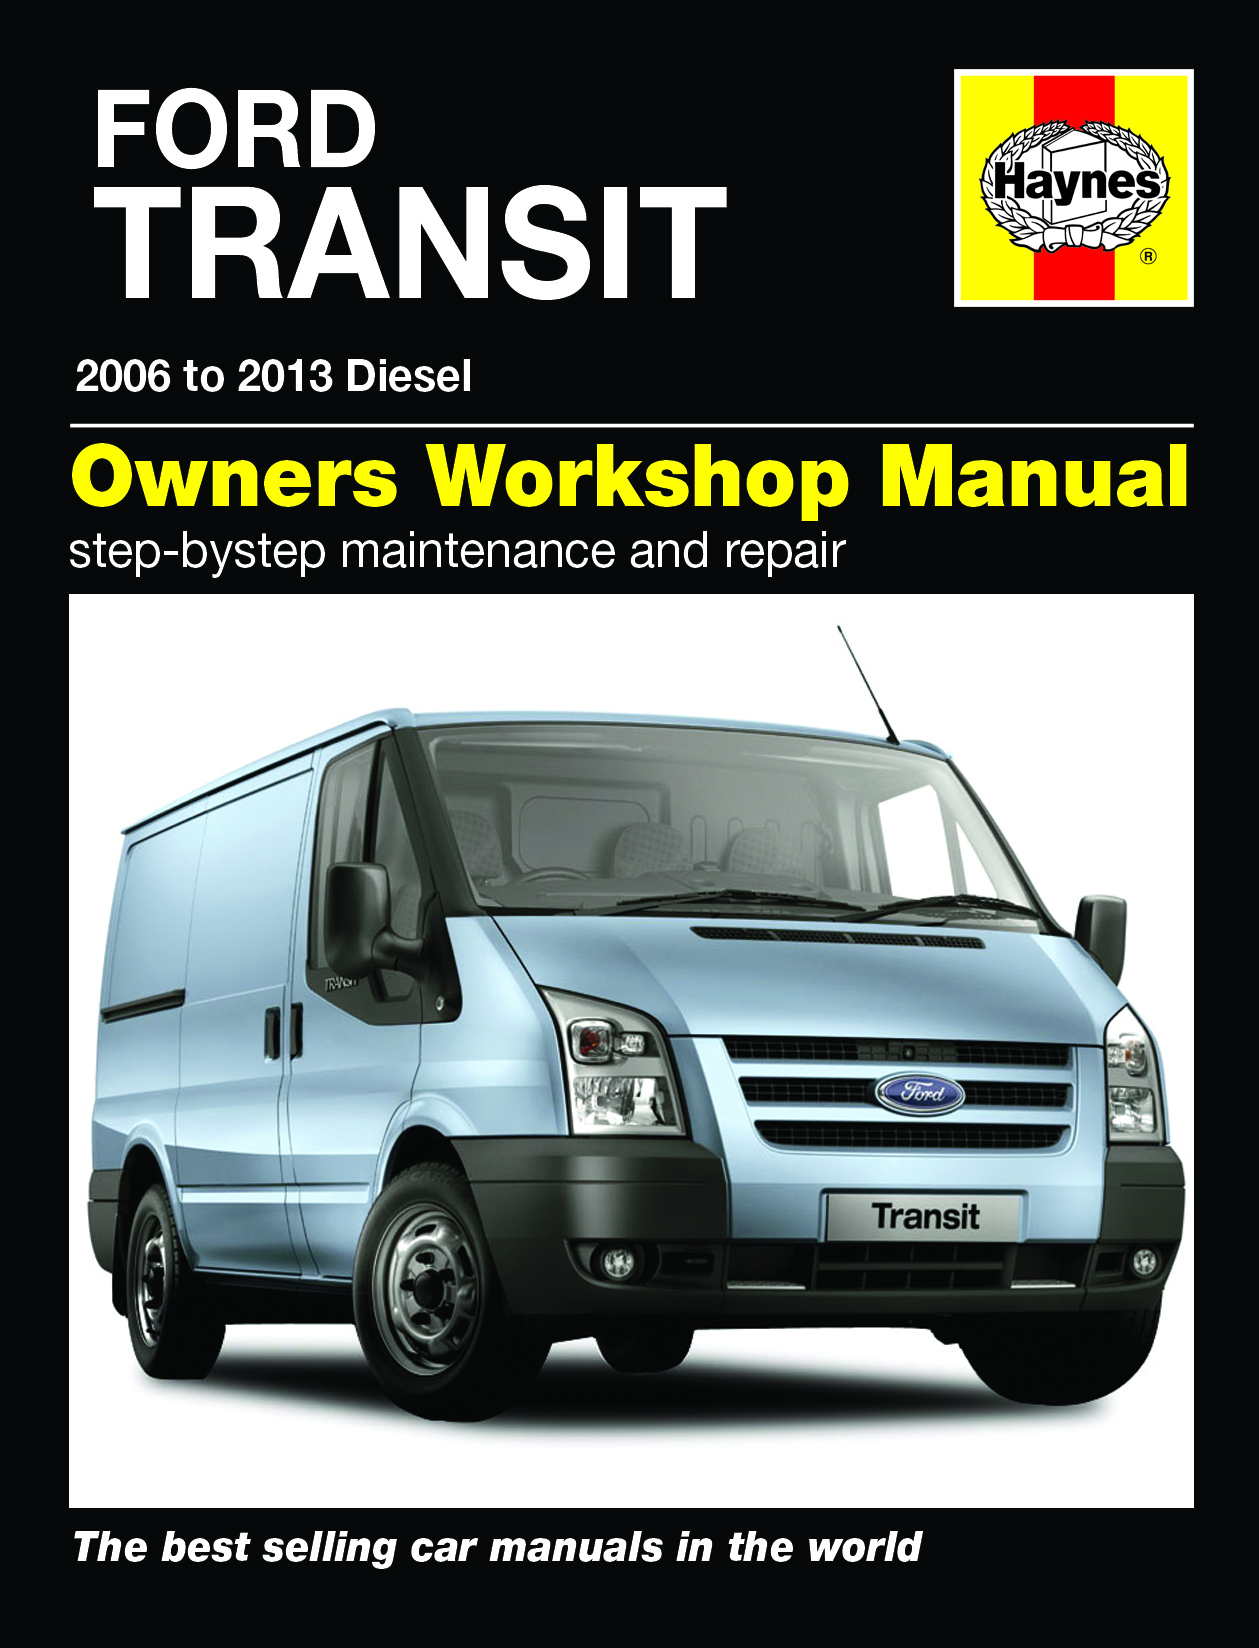 Ford transit connect workshop manual free download